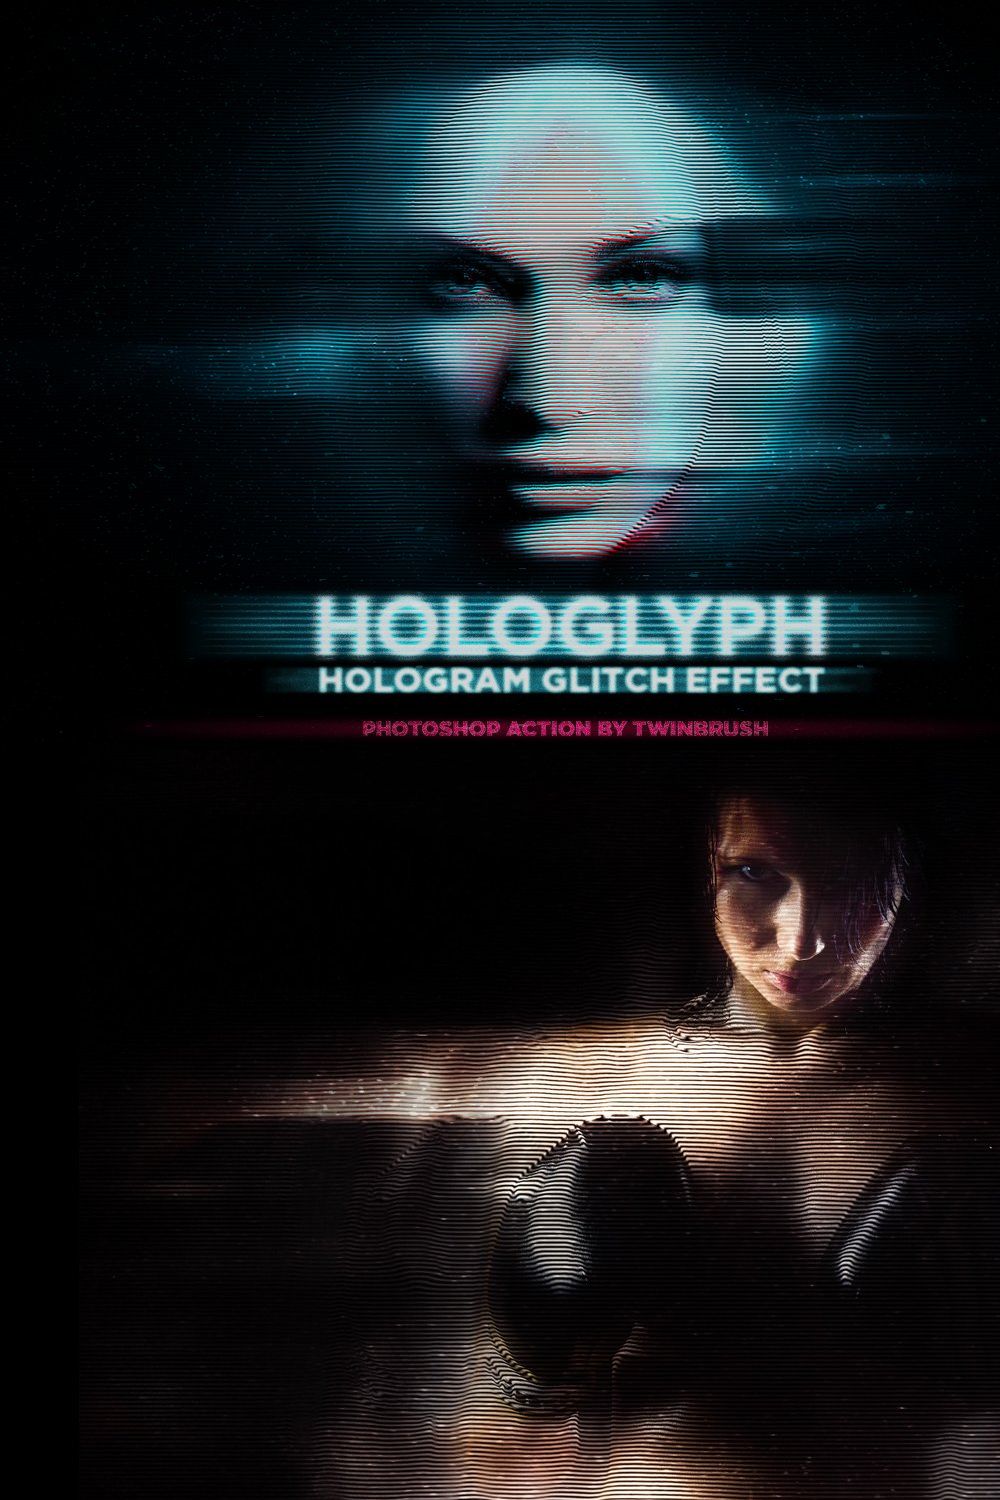 Hologlyph - Hologram Glitch Effect pinterest preview image.